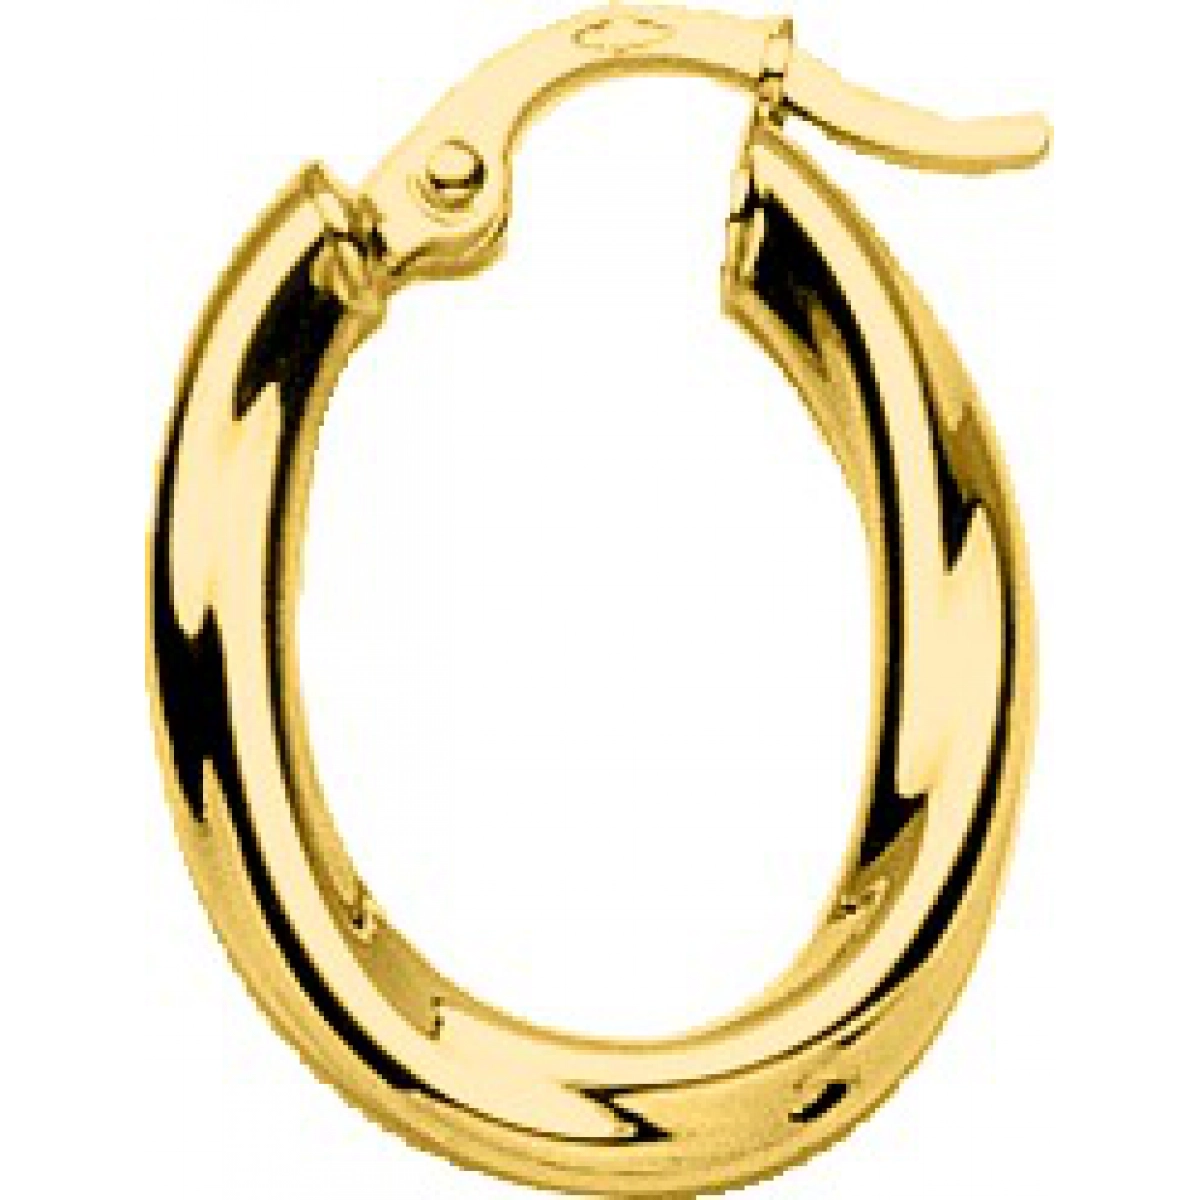 Hoops earrings pair gold plated Brass  Lua Blanca  135147.0